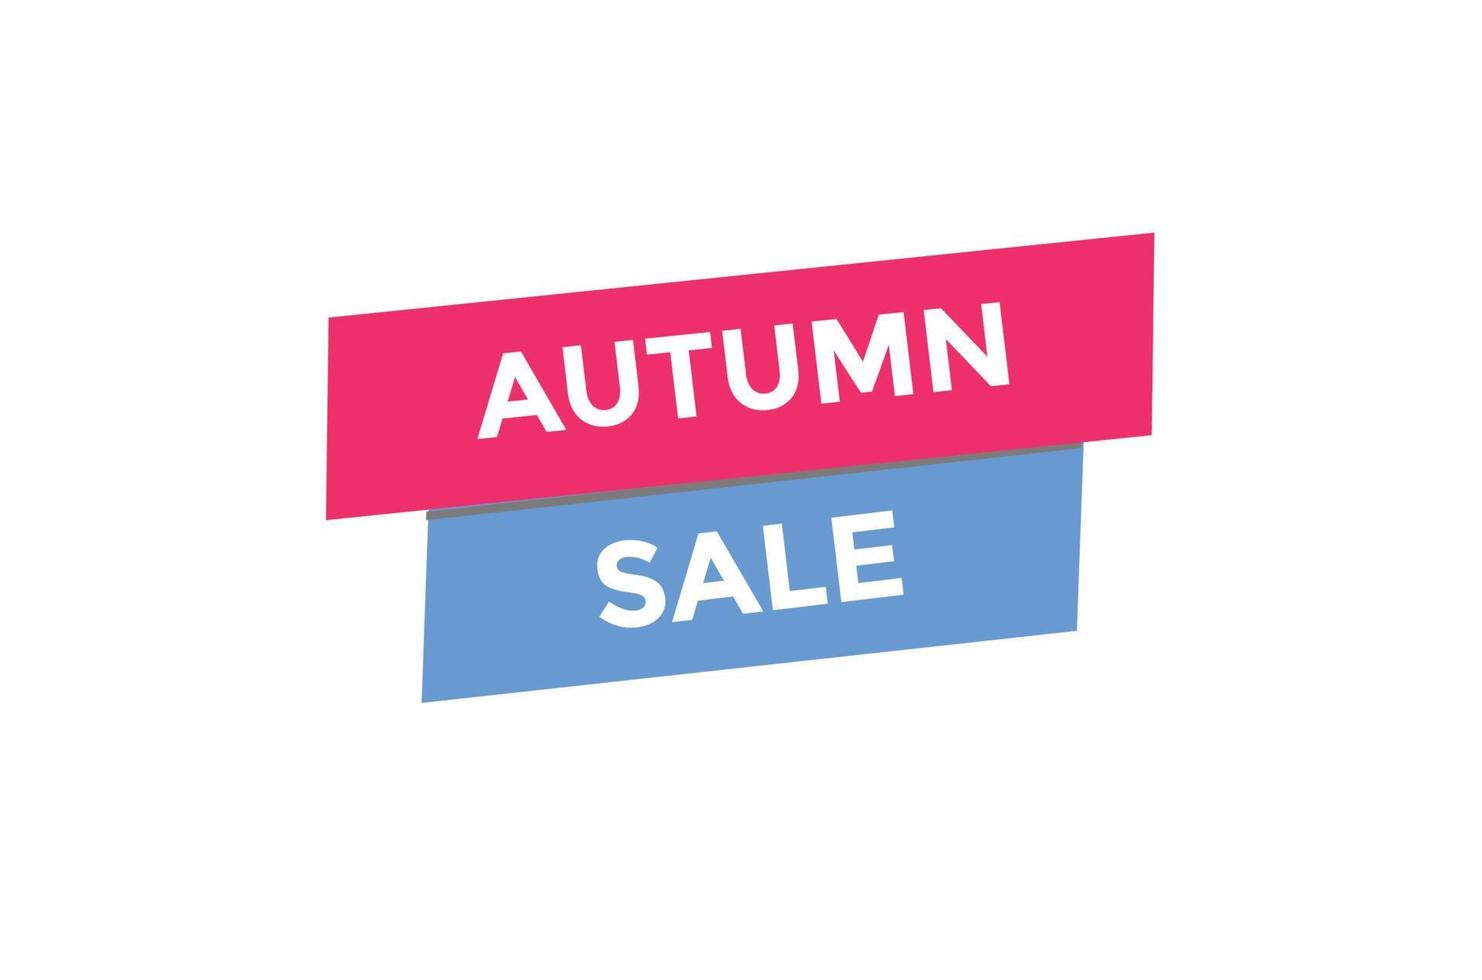 Autumn sale button web banner templates. Vector Illustration